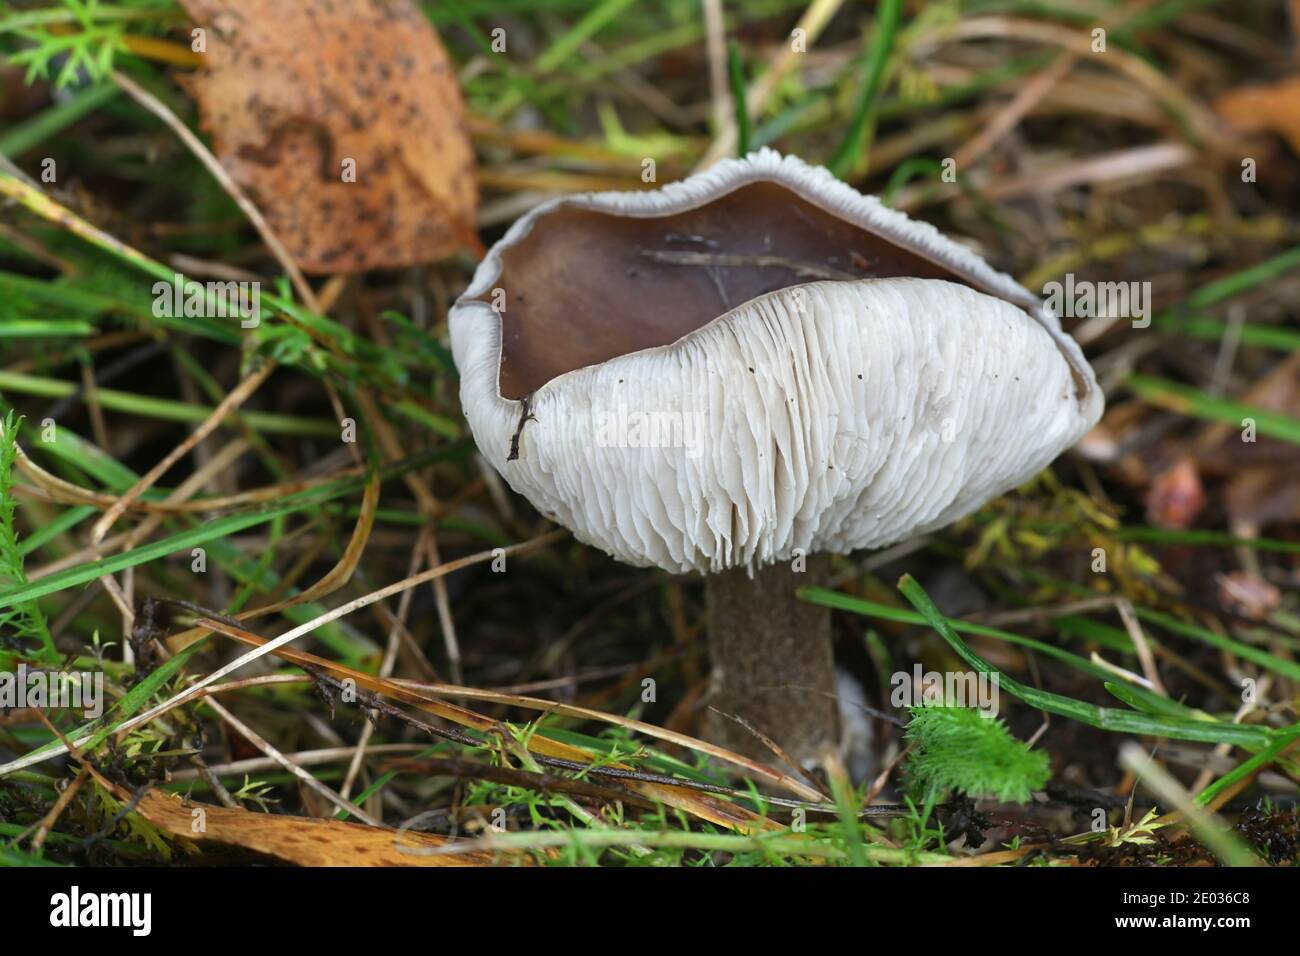 Melanoleuca melaleuca, sometimes called the bald cavalier or bald knight, wild mushroom from Finland Stock Photo